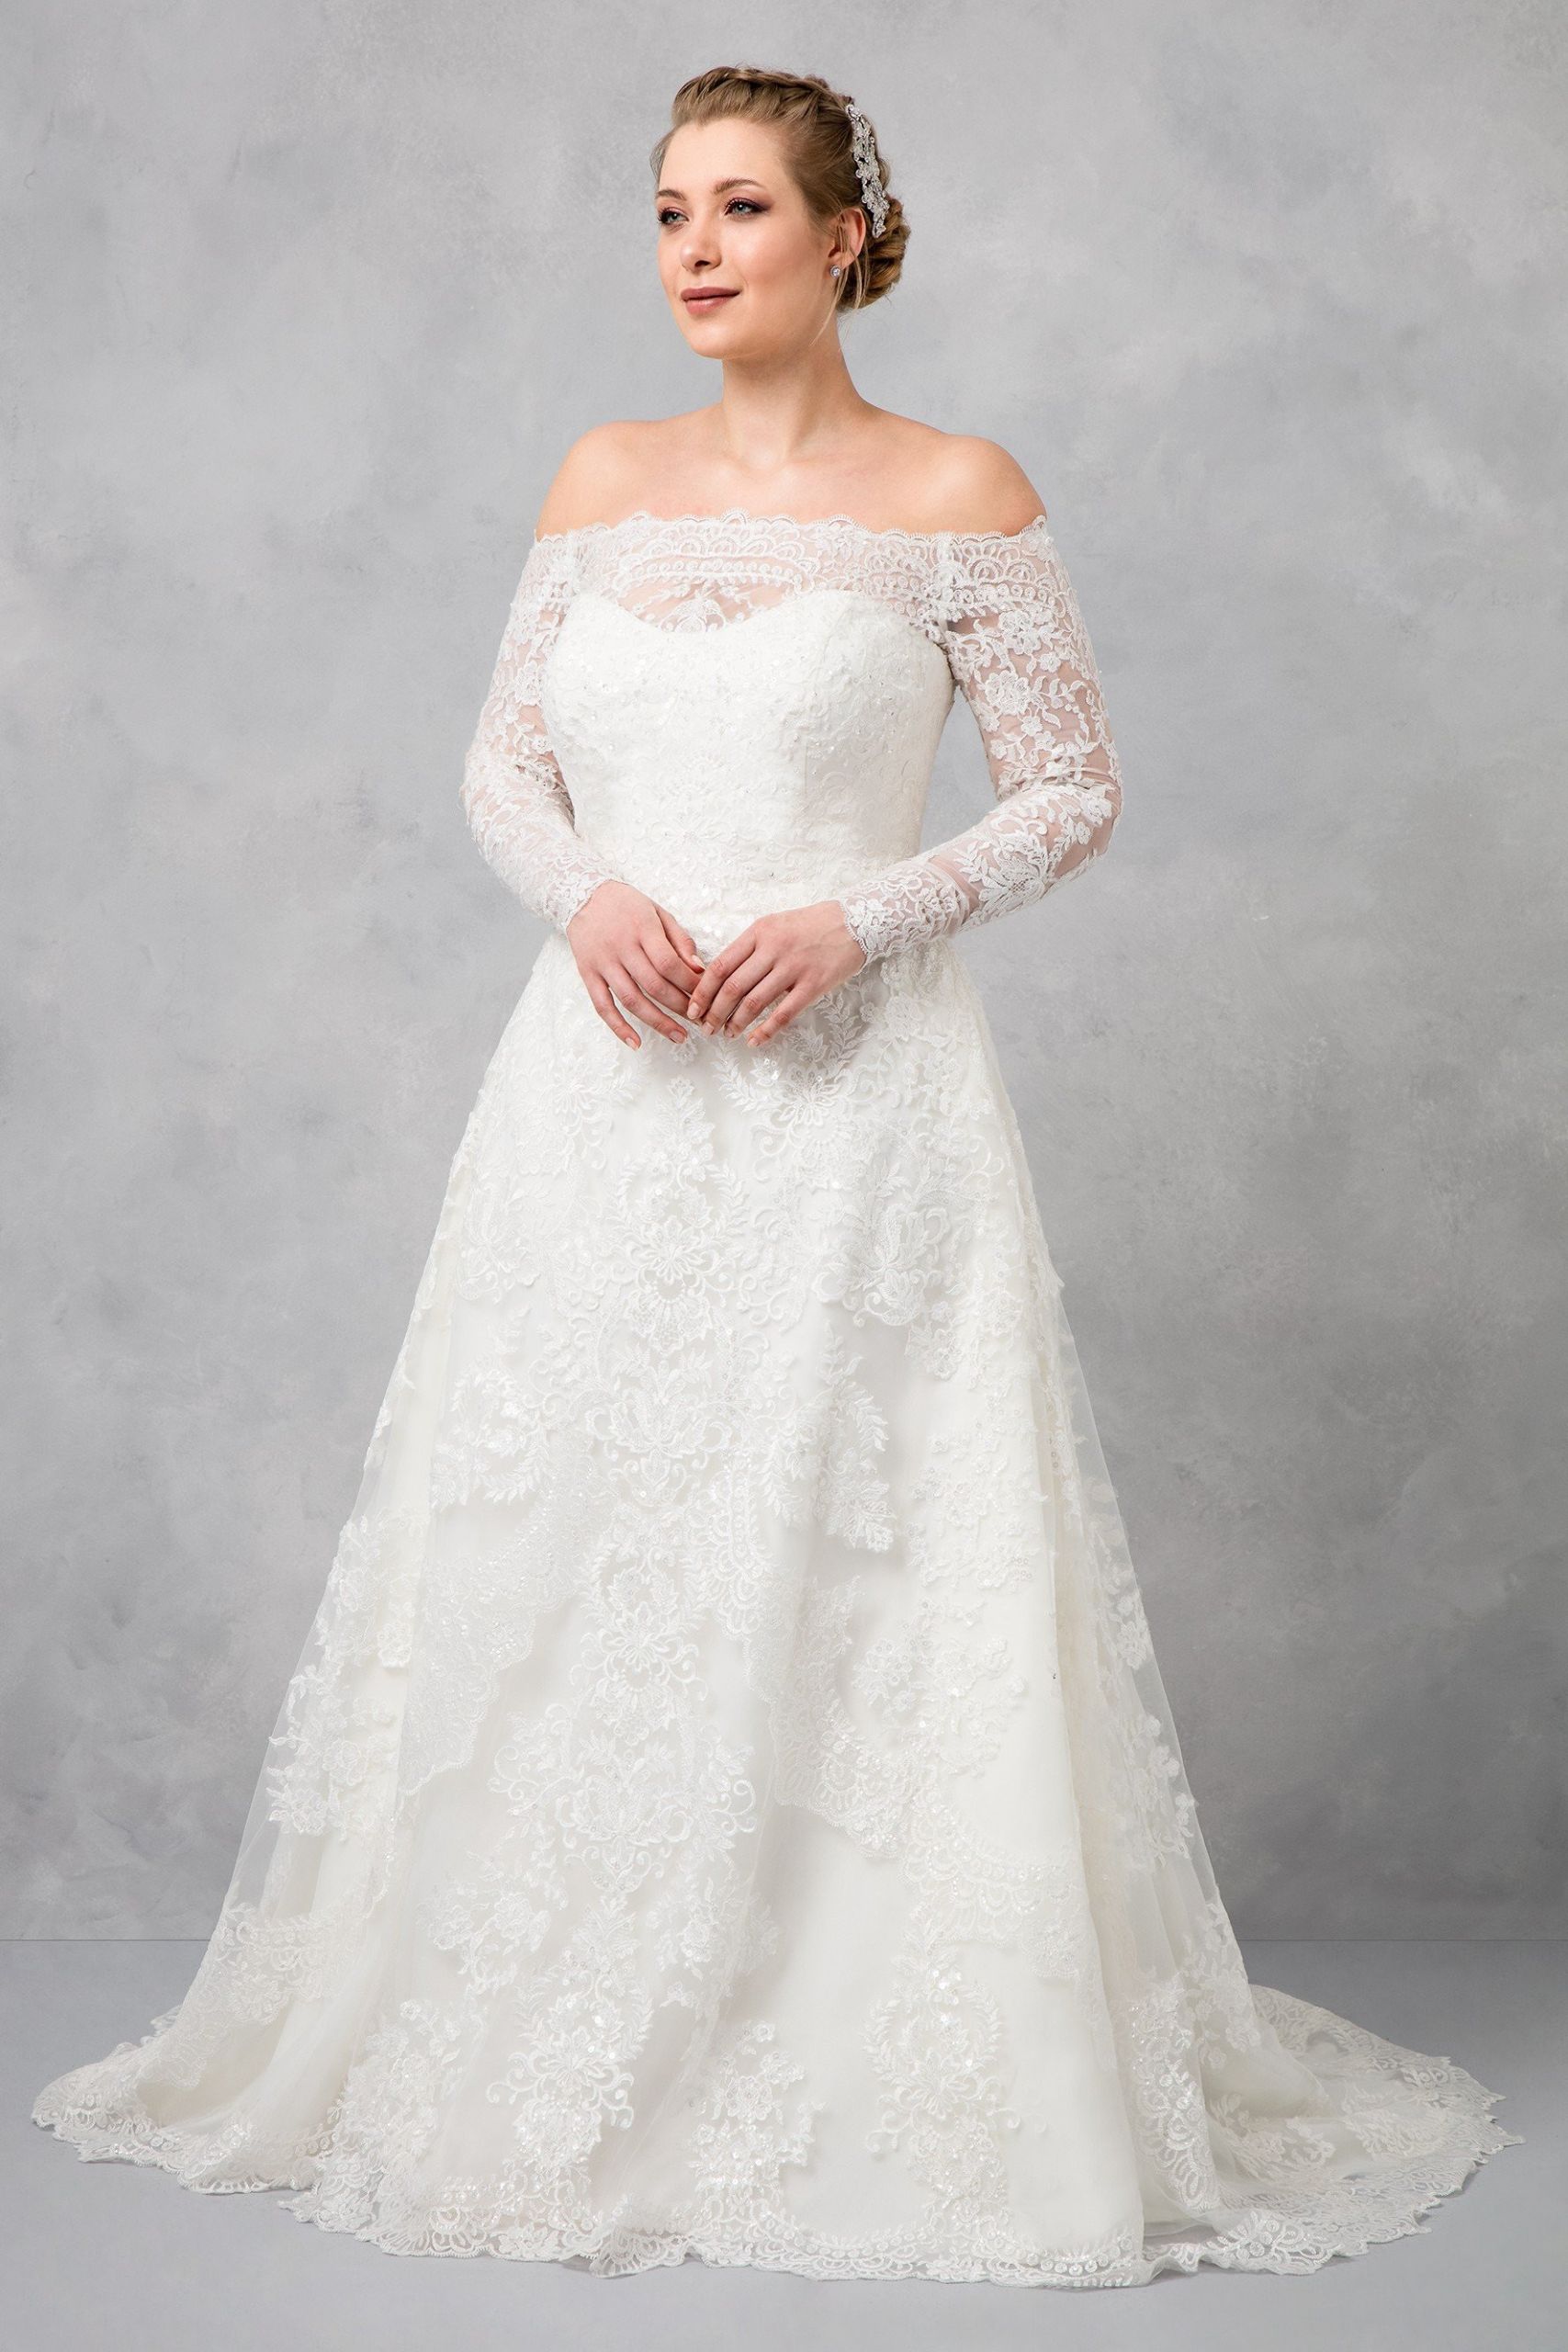 Off The Shoulder Wedding Gown
 f The Shoulder Plus Size A Line Wedding Dress 8CWG765